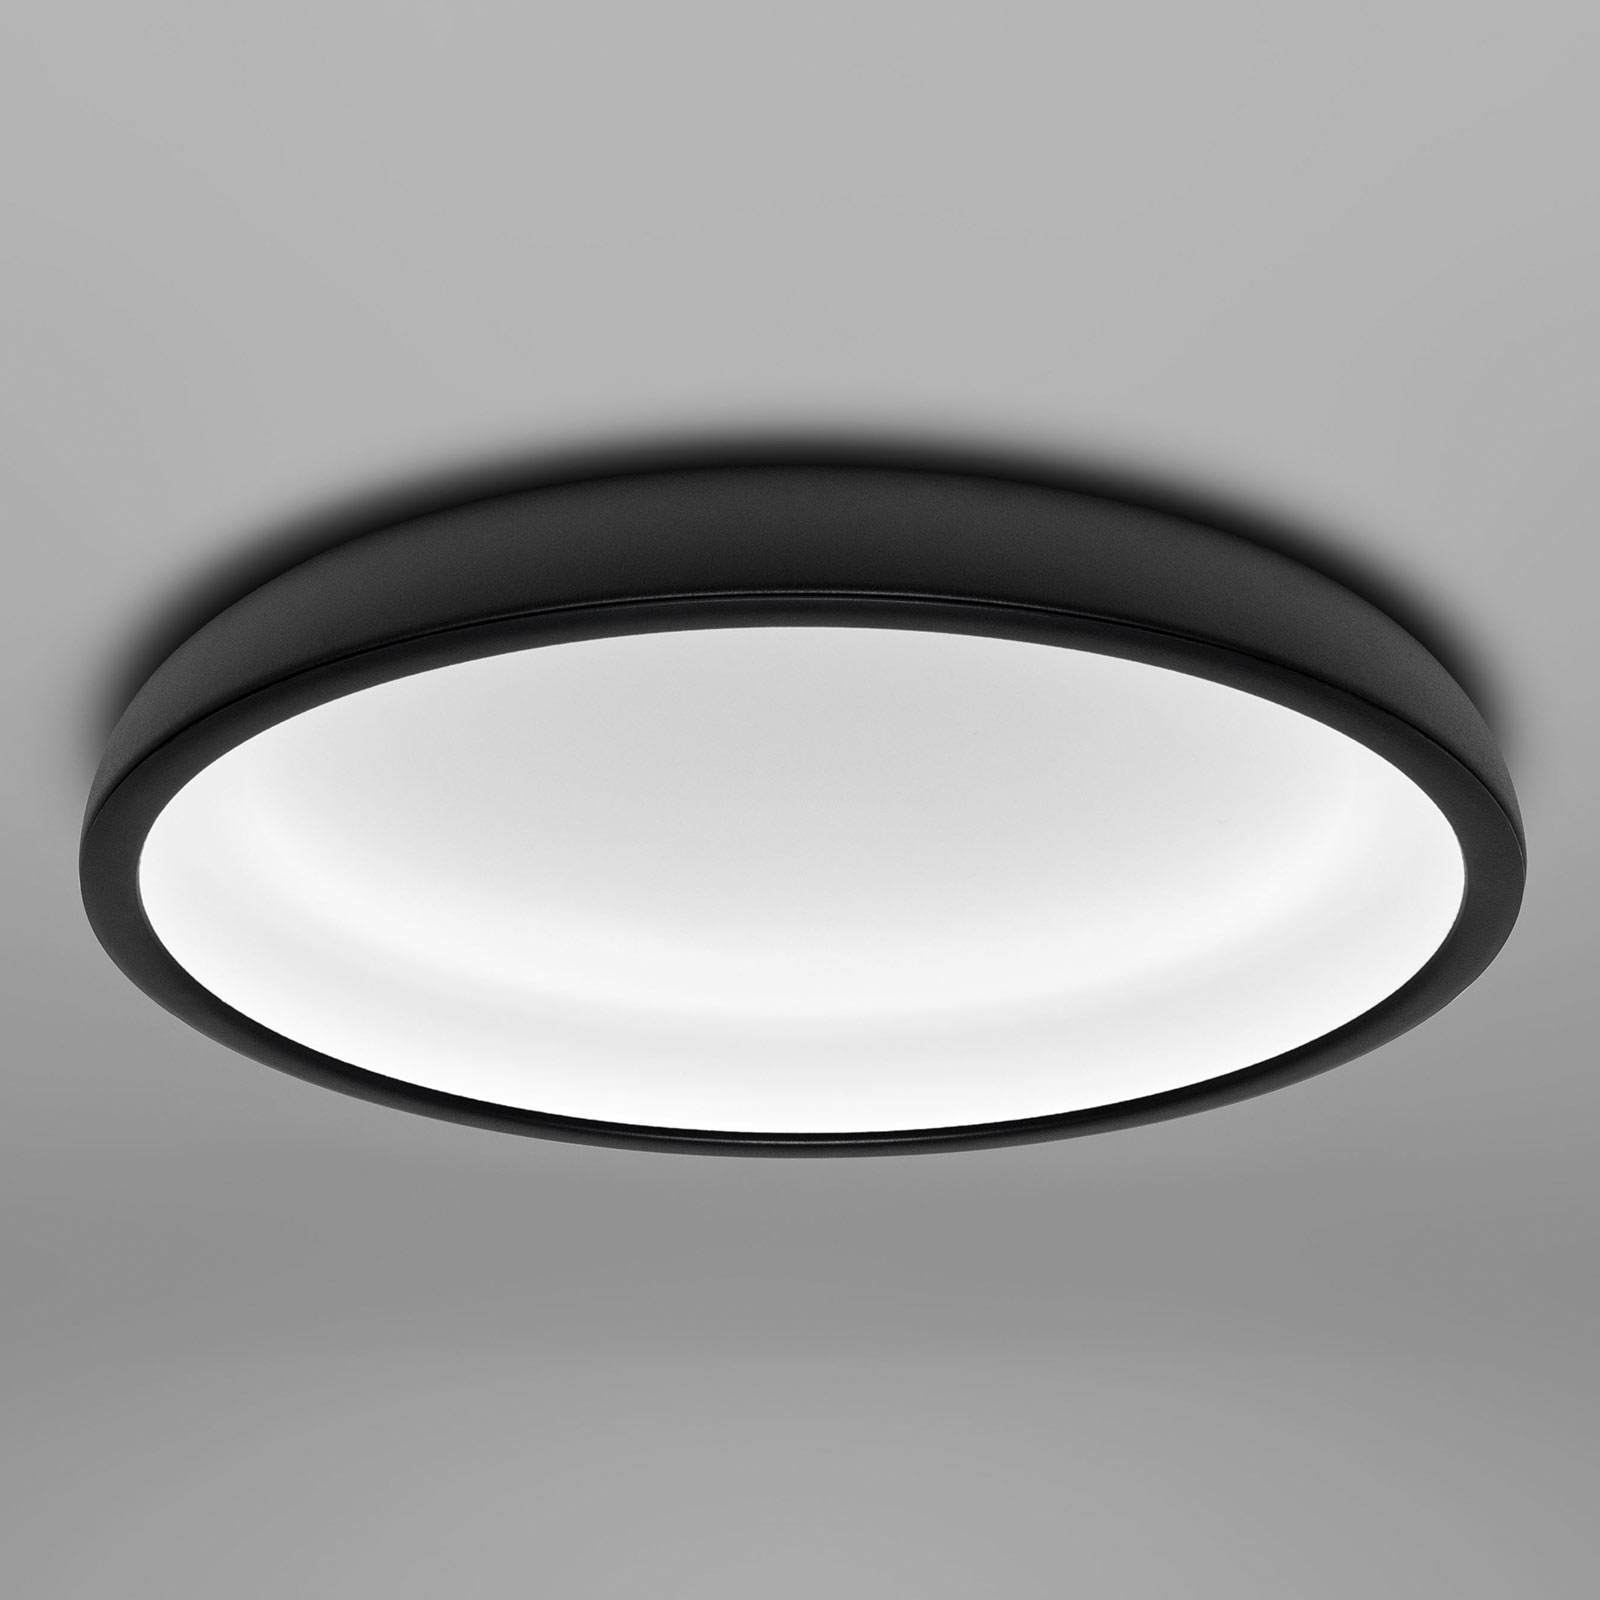 LED-kattovalaisin Reflexio, Ø 46 cm, musta